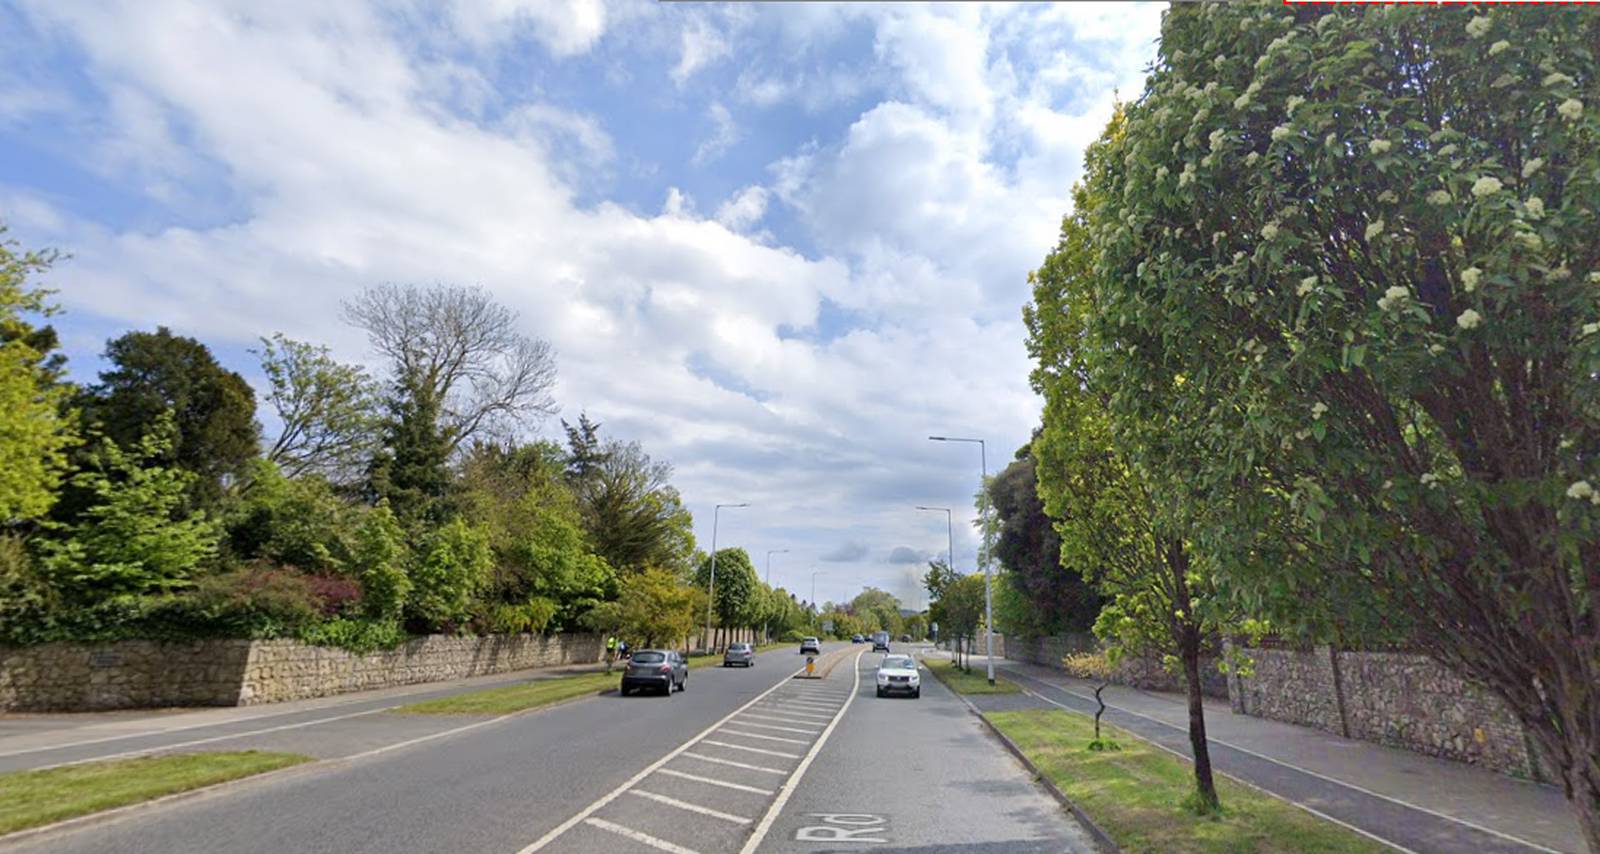 Church Road, Killiney. Google Street View